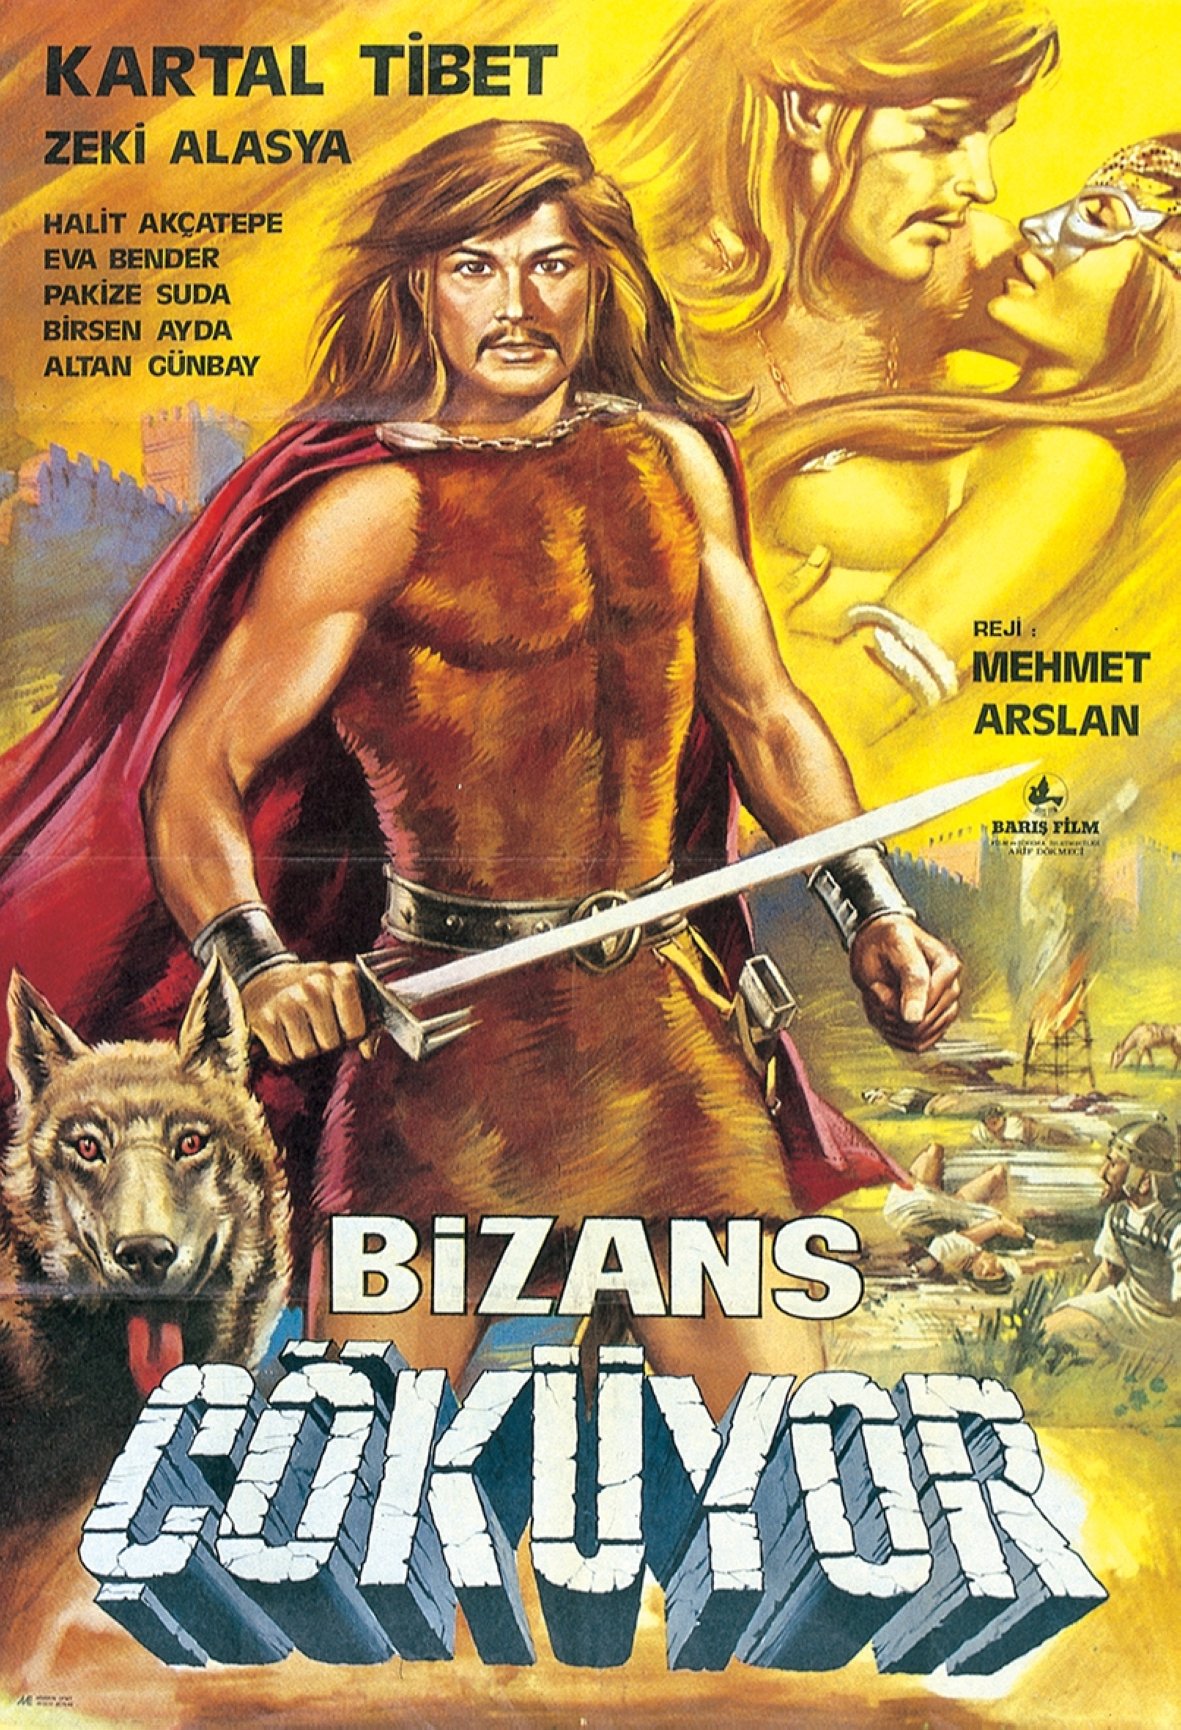 'Bizans Çöküyor' movie poster, Arzu Film, 1973. (Courtesy of Pera Museum)